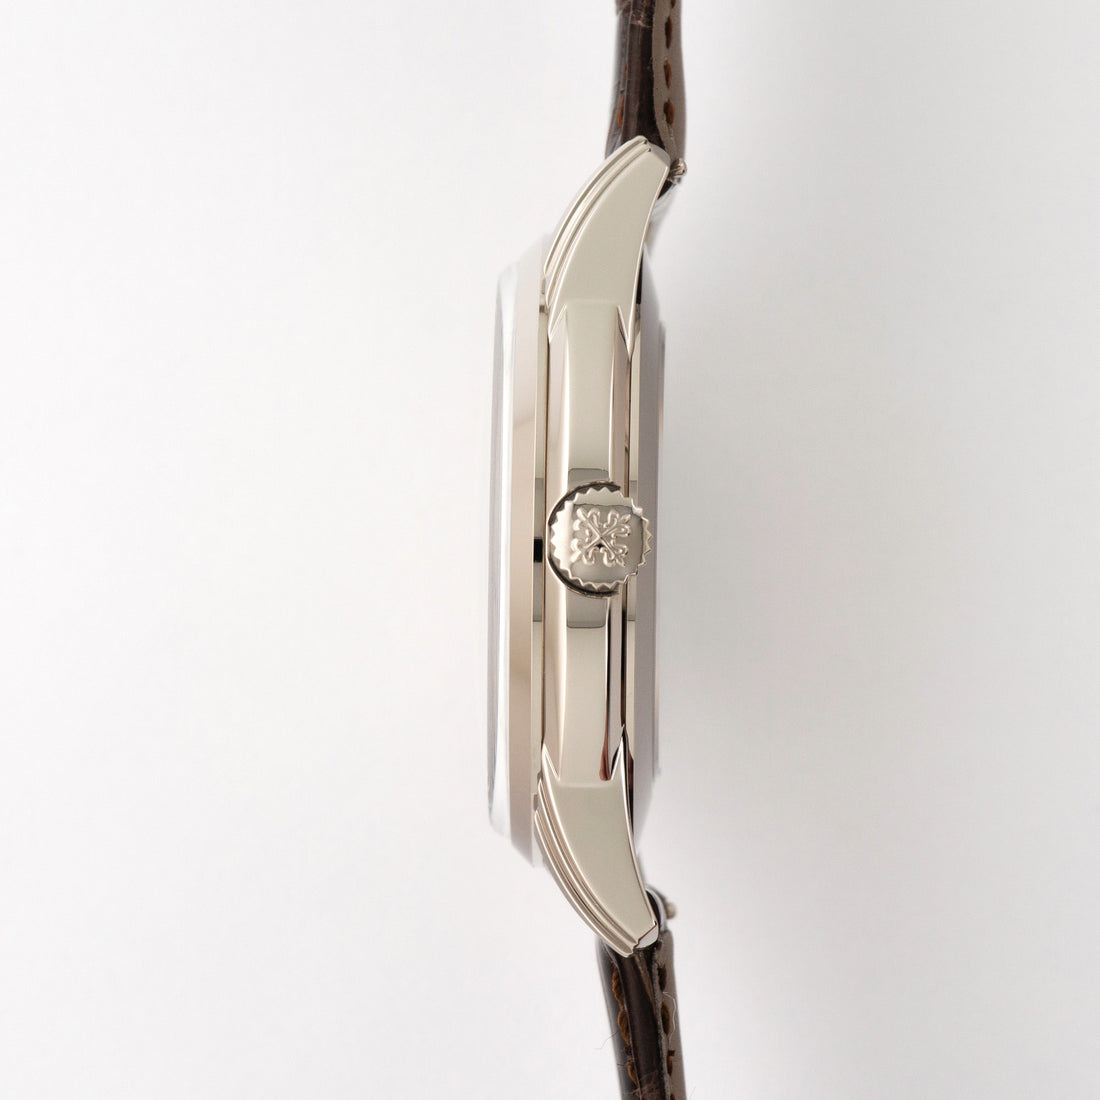 Patek Philippe White Gold Perpetual Watch Ref. 5320